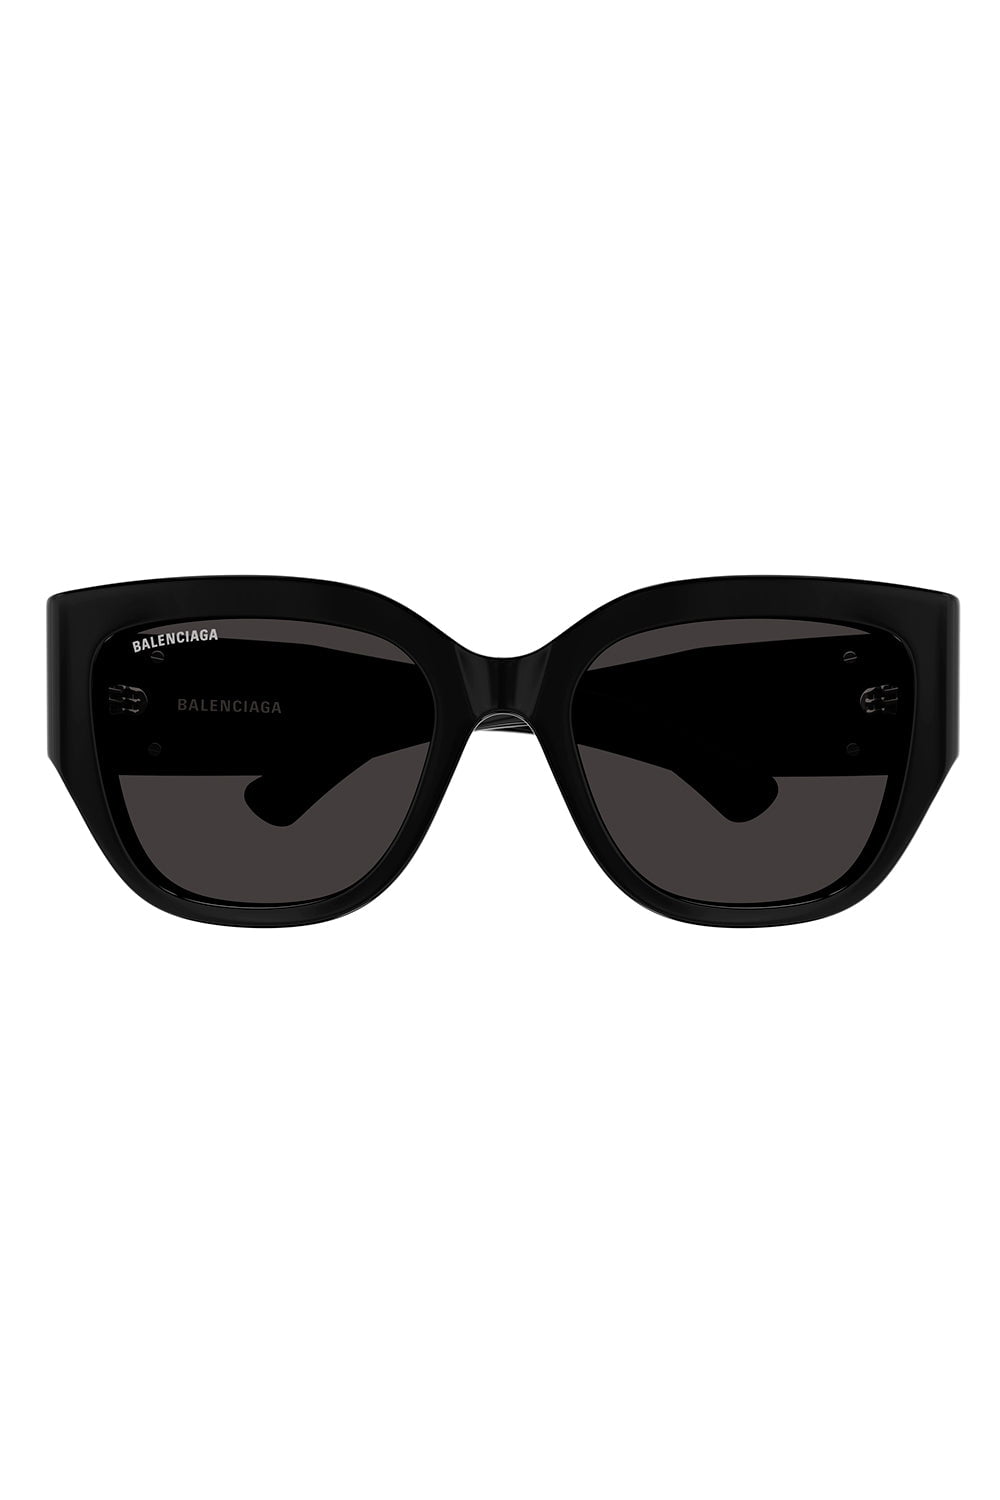 BALENCIAGA-Bossy Sunglasses-BLACK/GREY